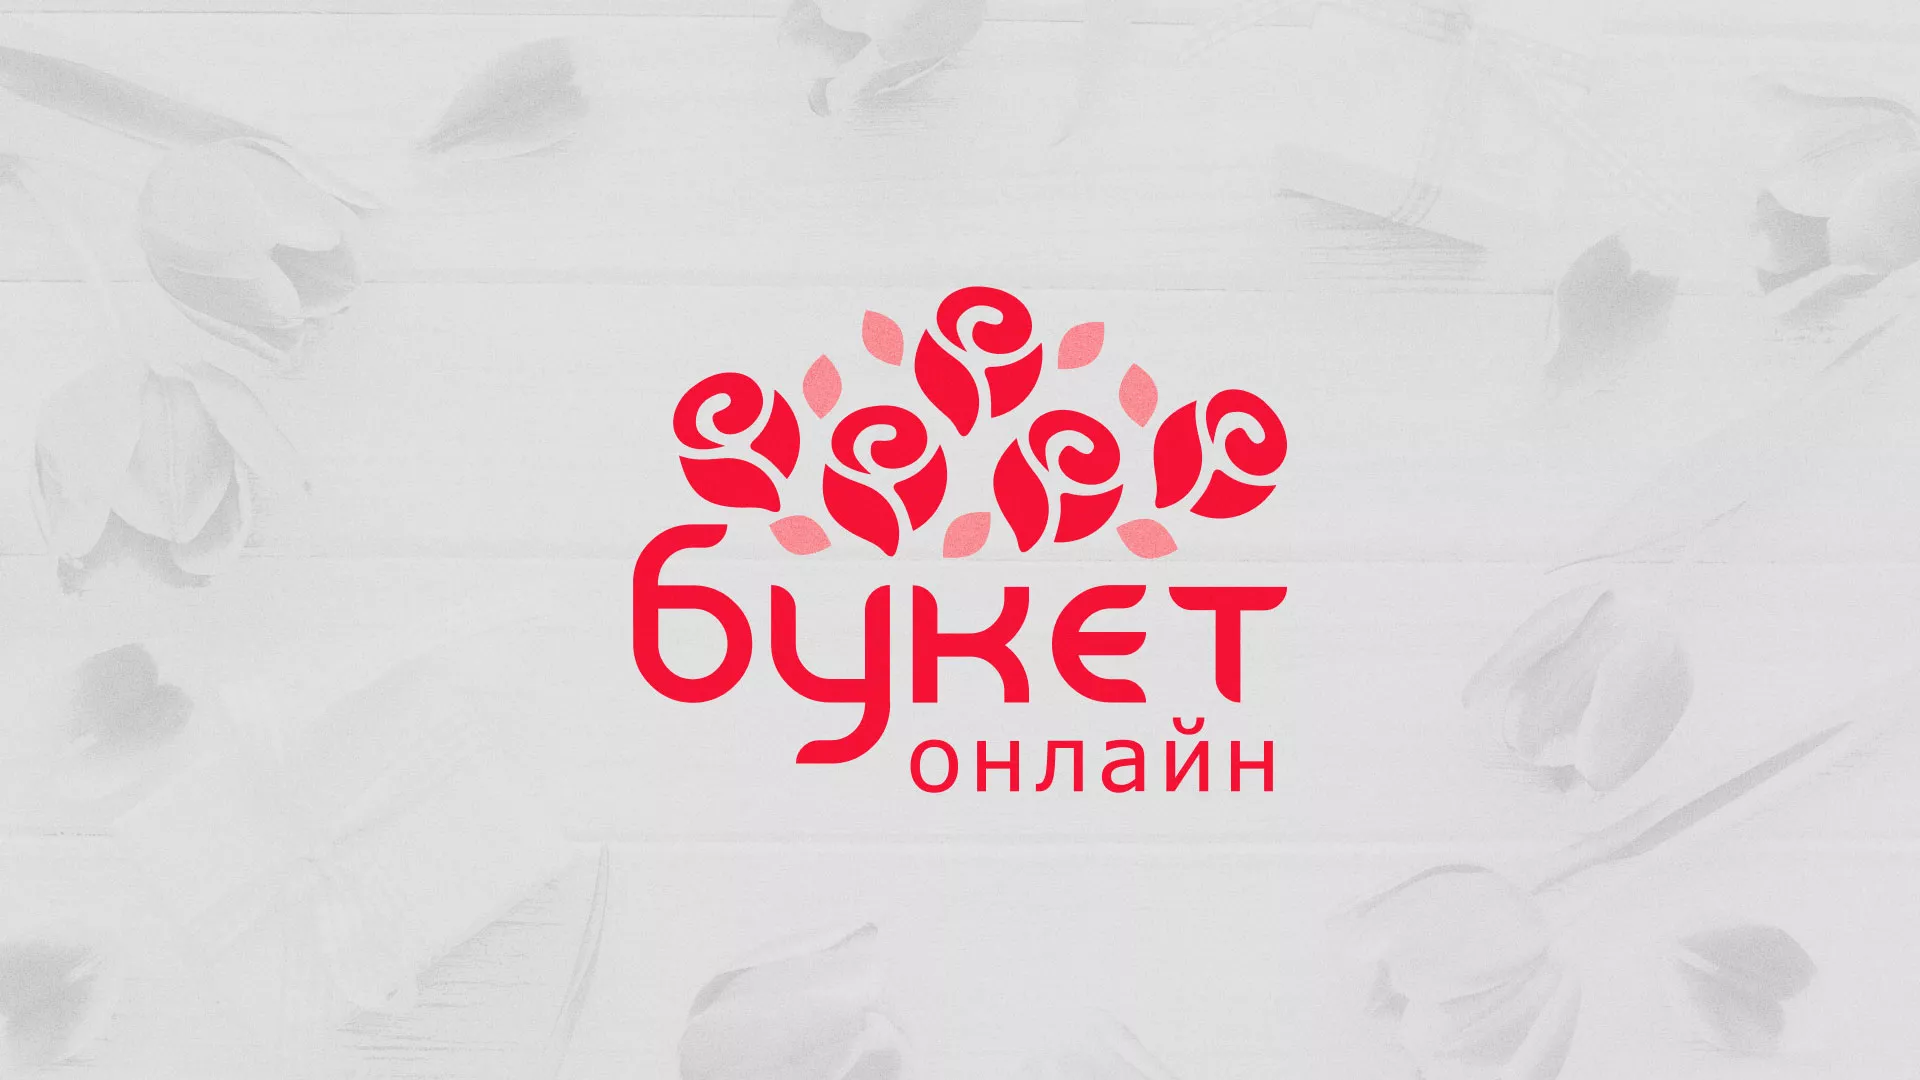 Создание интернет-магазина «Букет-онлайн» по цветам в Киренске